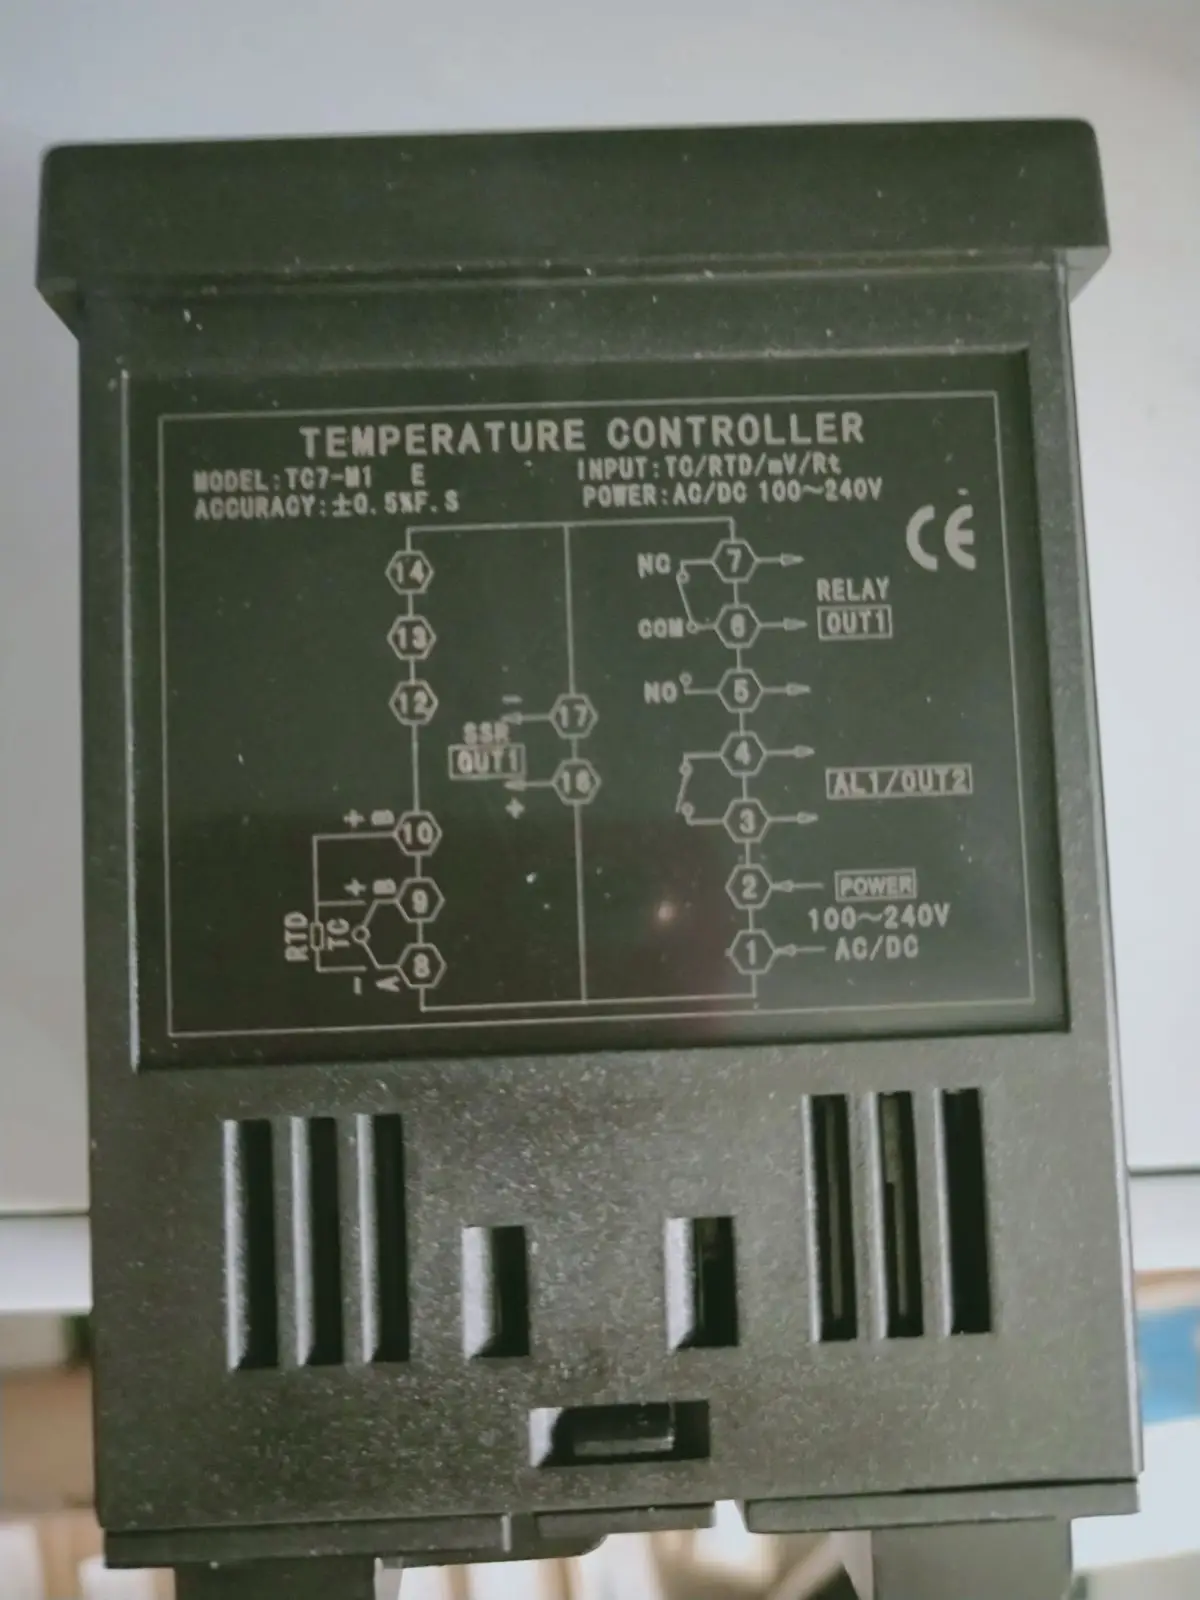 Zhongda Songmei SOMMY интеллектуальная панель контроля температуры TC7-R1 Q1 интеллектуальный контроллер температуры TC7-M1 версия E